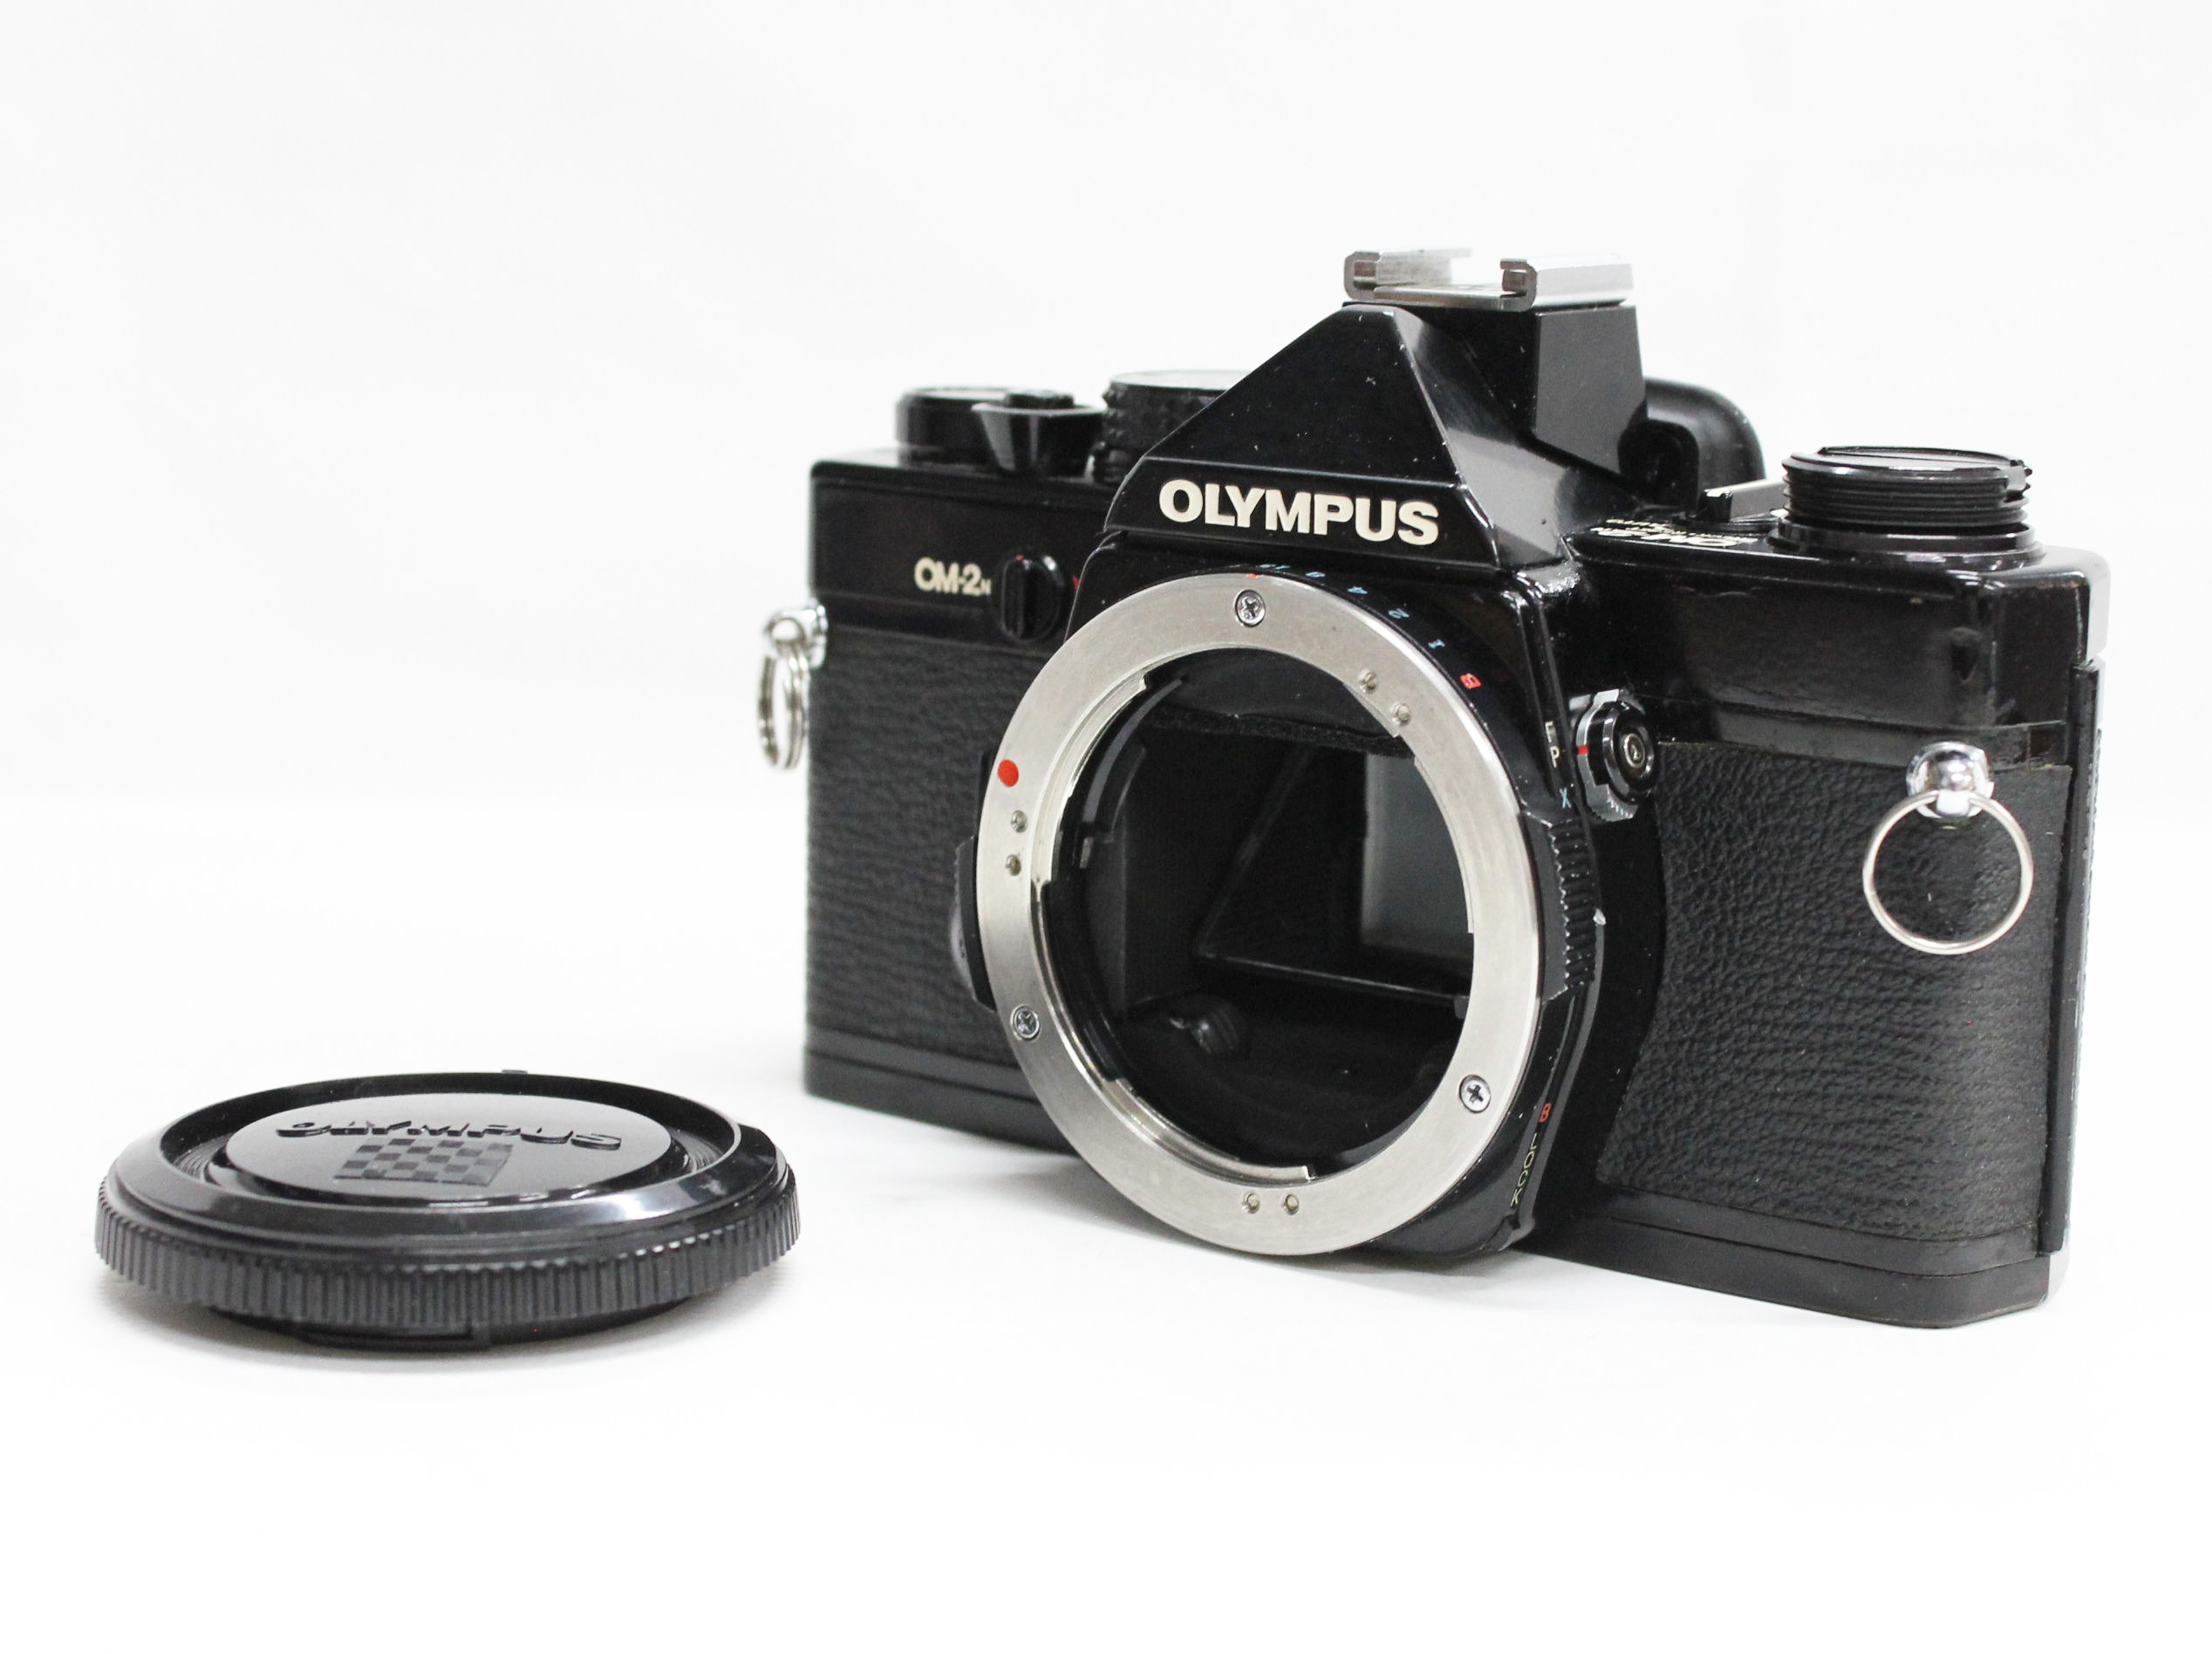 Japan Used Camera Shop | [Excellent++] Olympus OM-2n 35mm SLR Film Camera Body Black from Japan